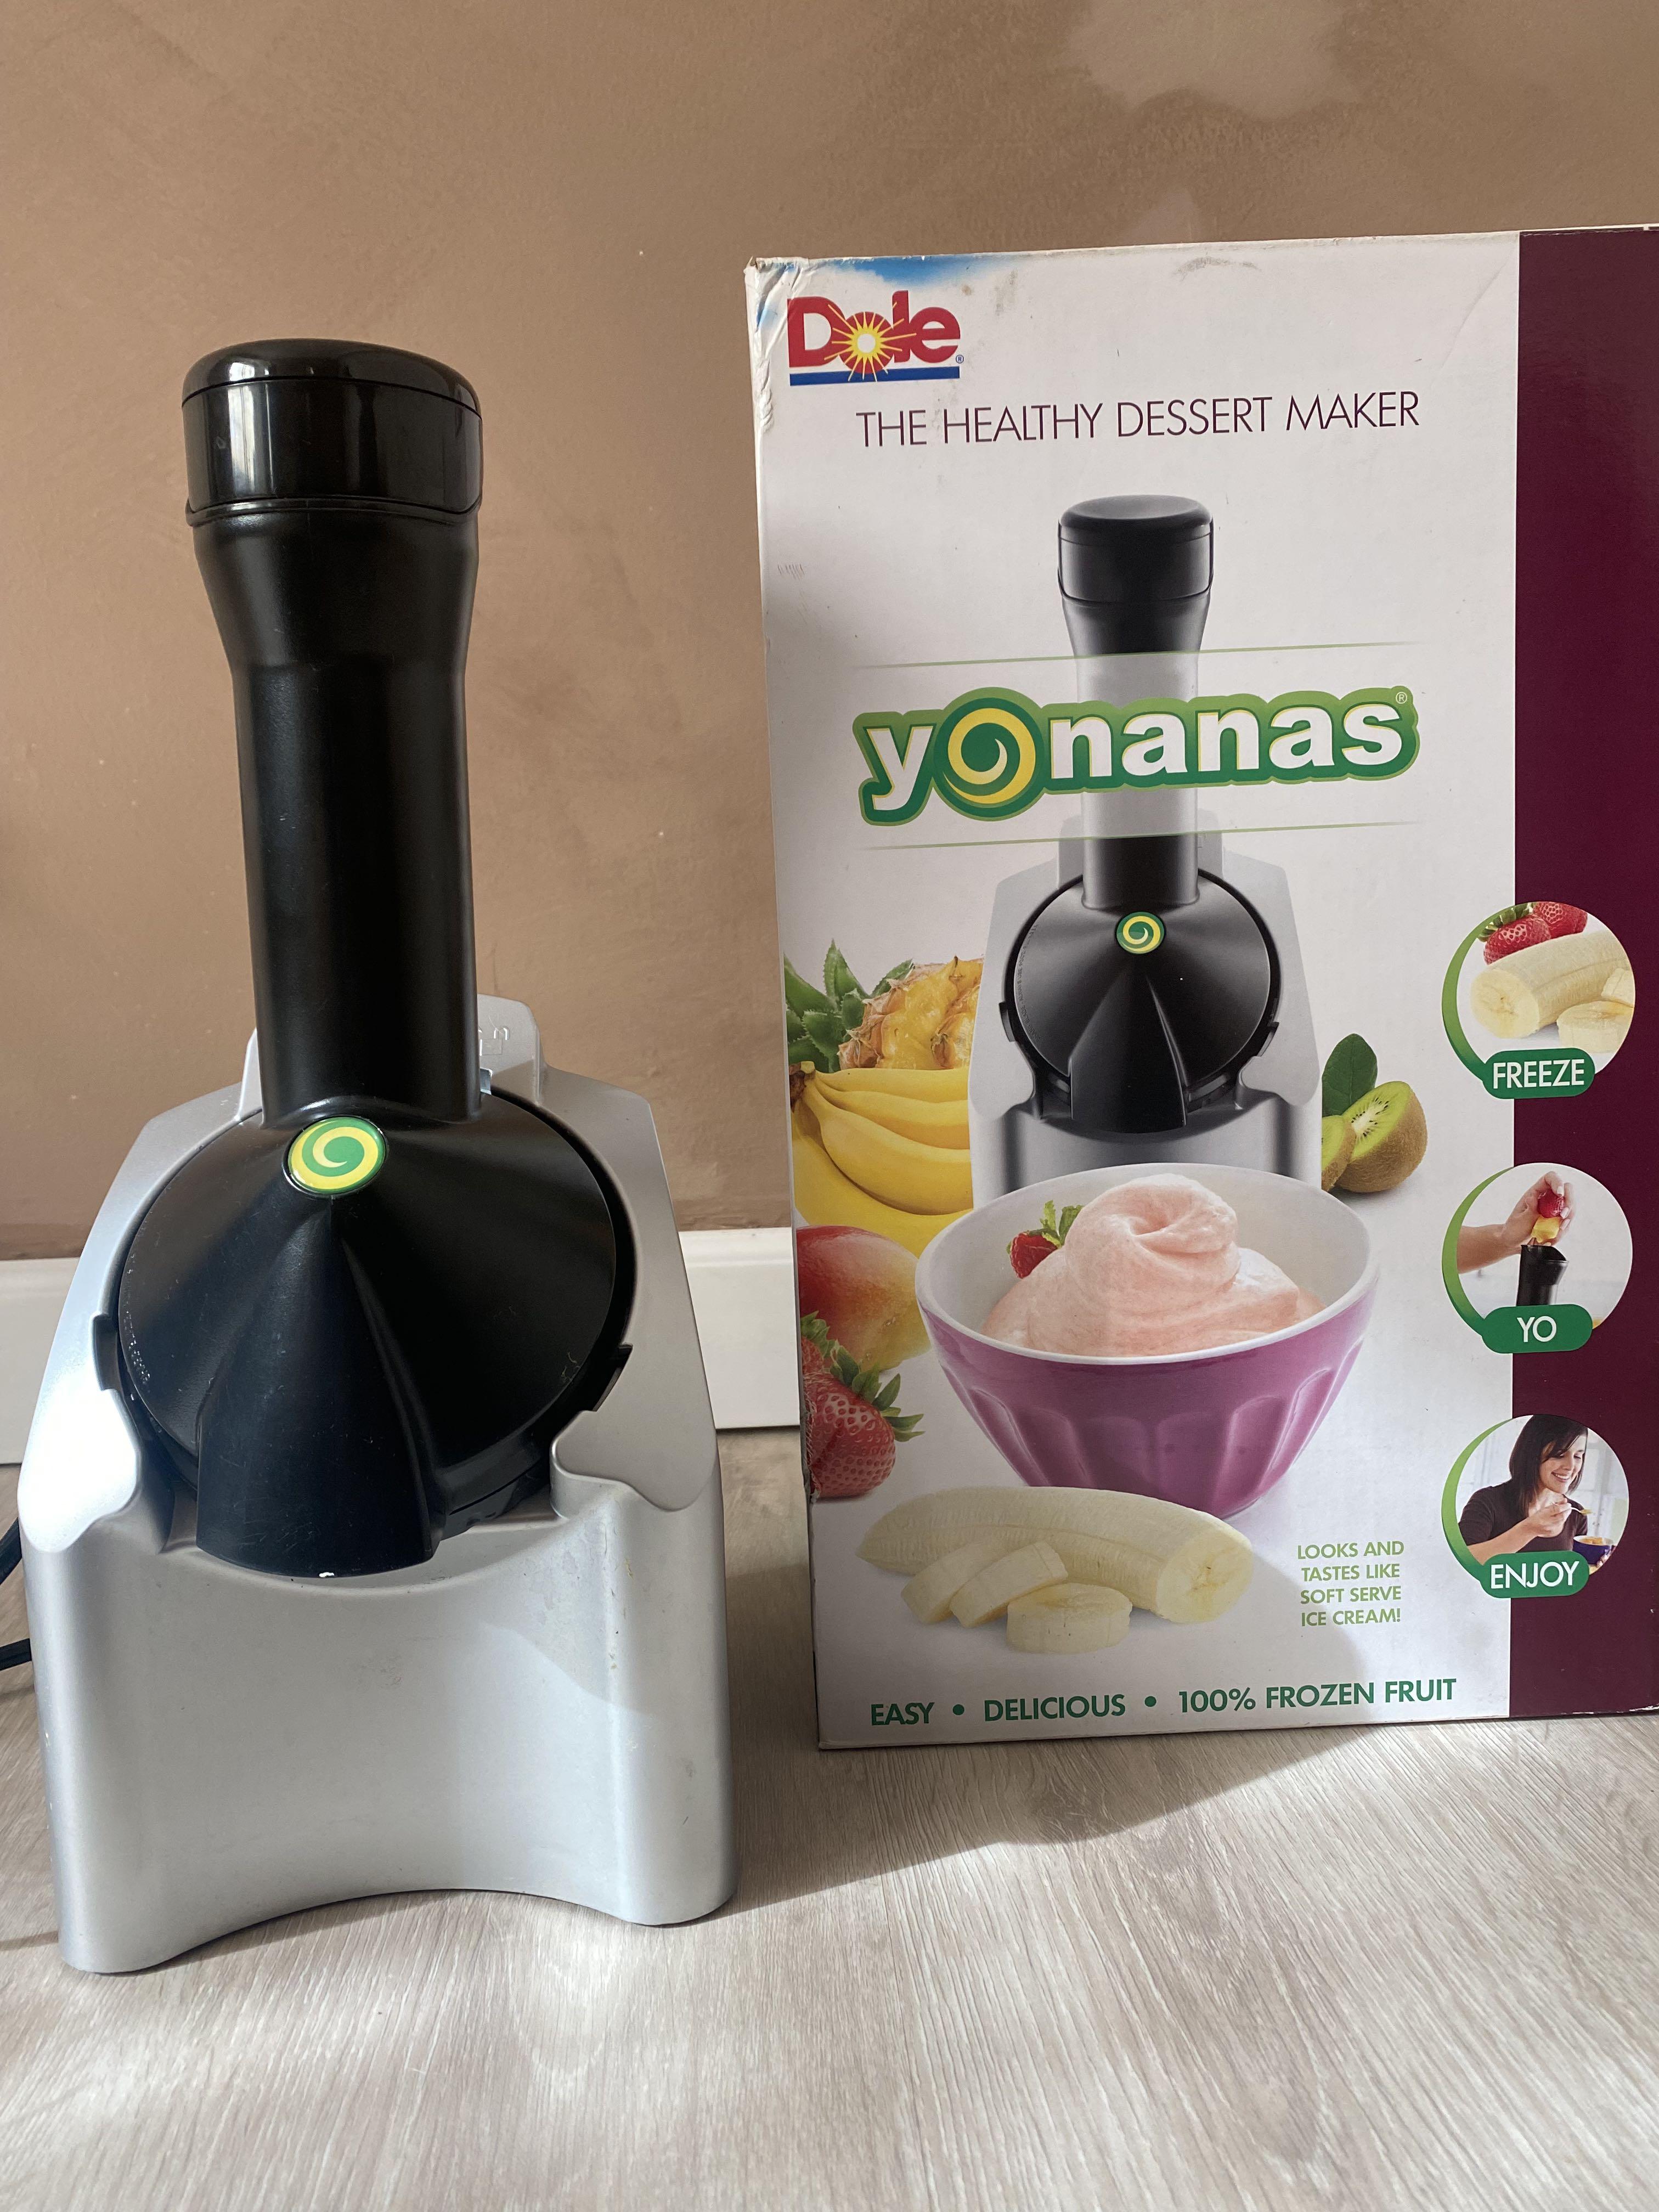 Dole Yonanas Dessert Maker